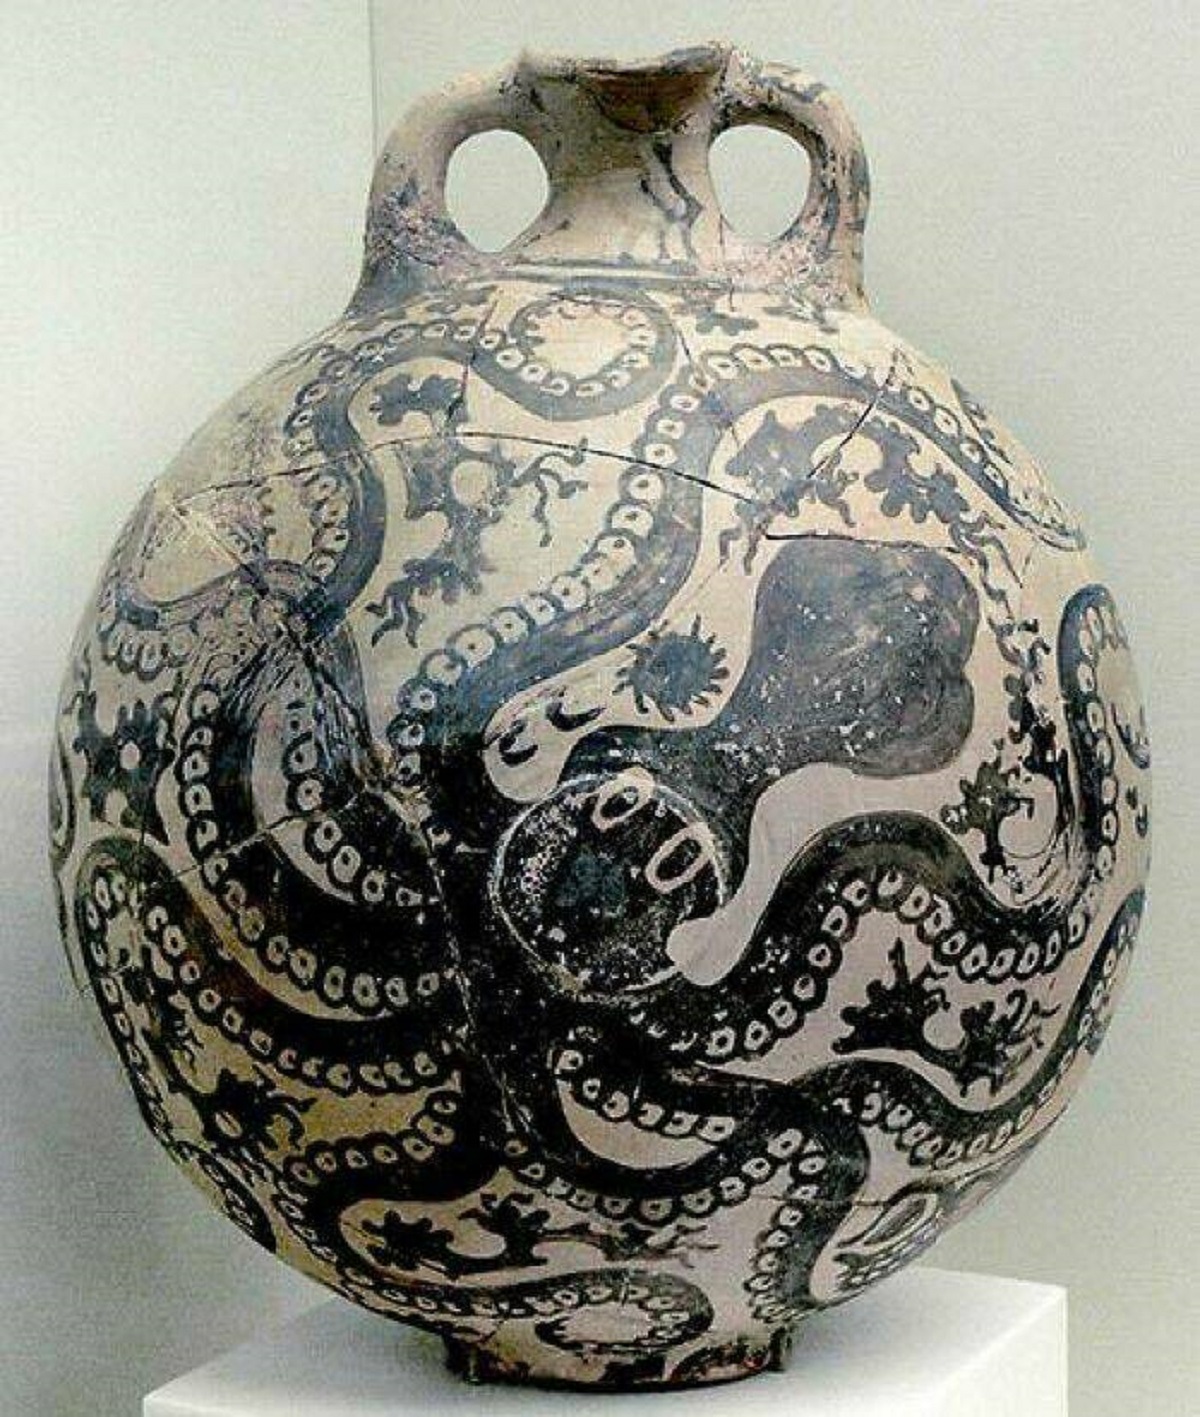 "Octopus Vase From Palaikastro. Greek, 1500 Bce"